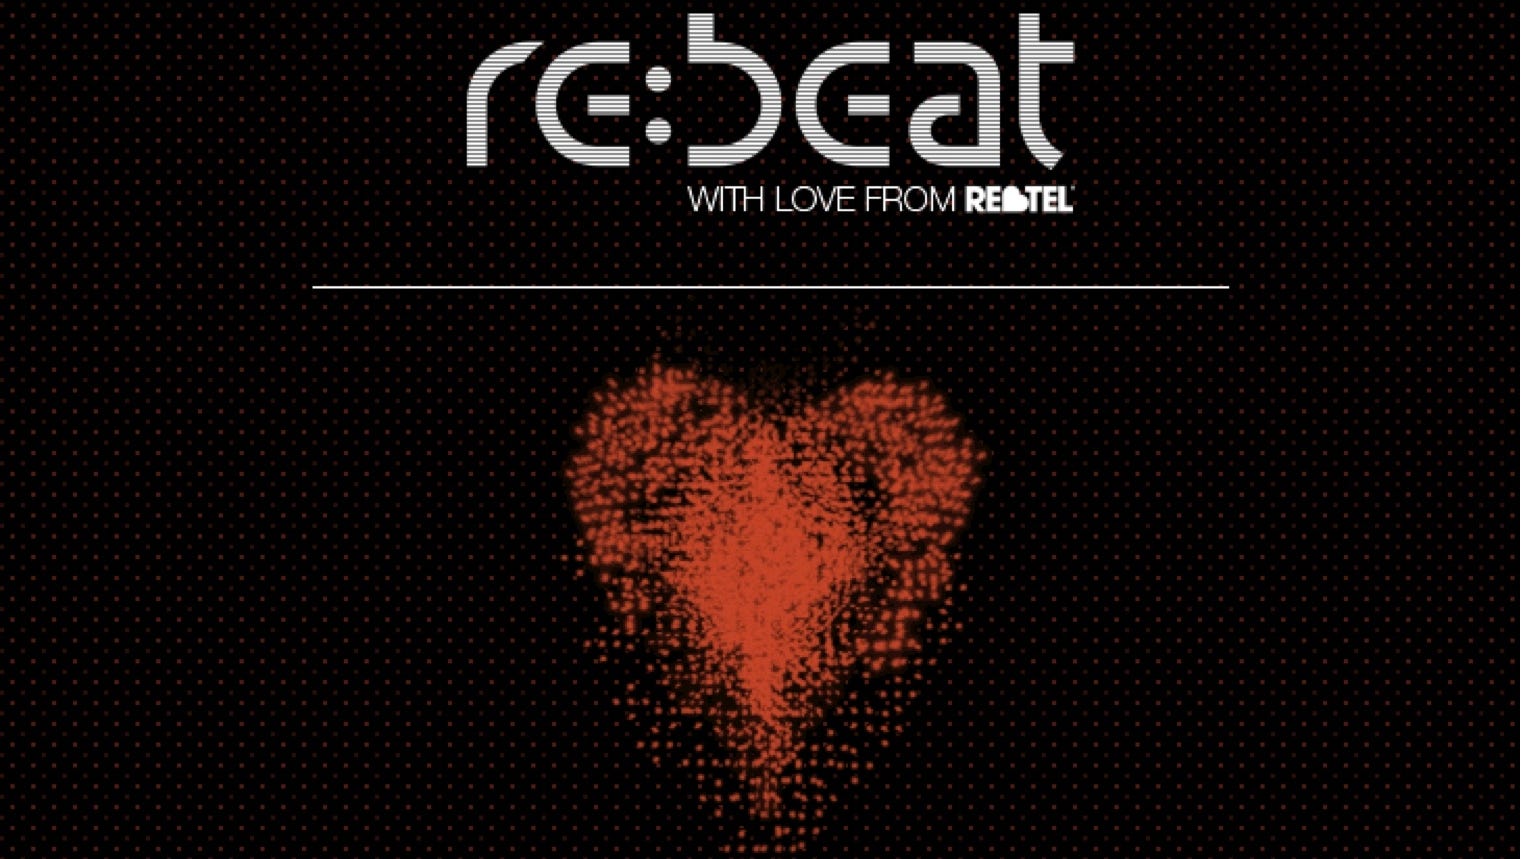 heartbeat recorder app